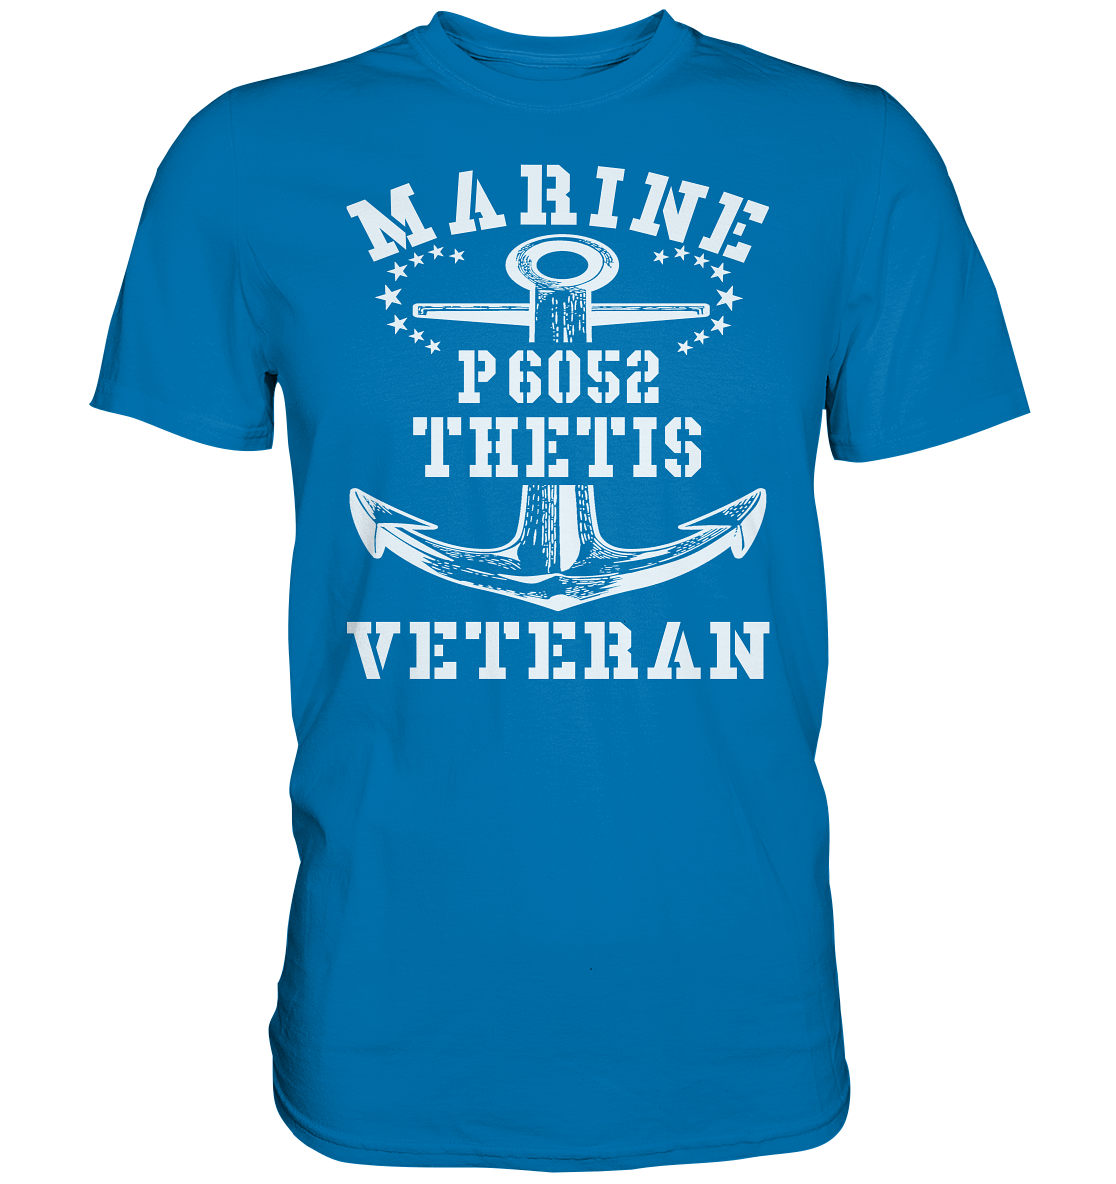 U-Jagdboot P6052 THETIS Marine Veteran - Premium Shirt